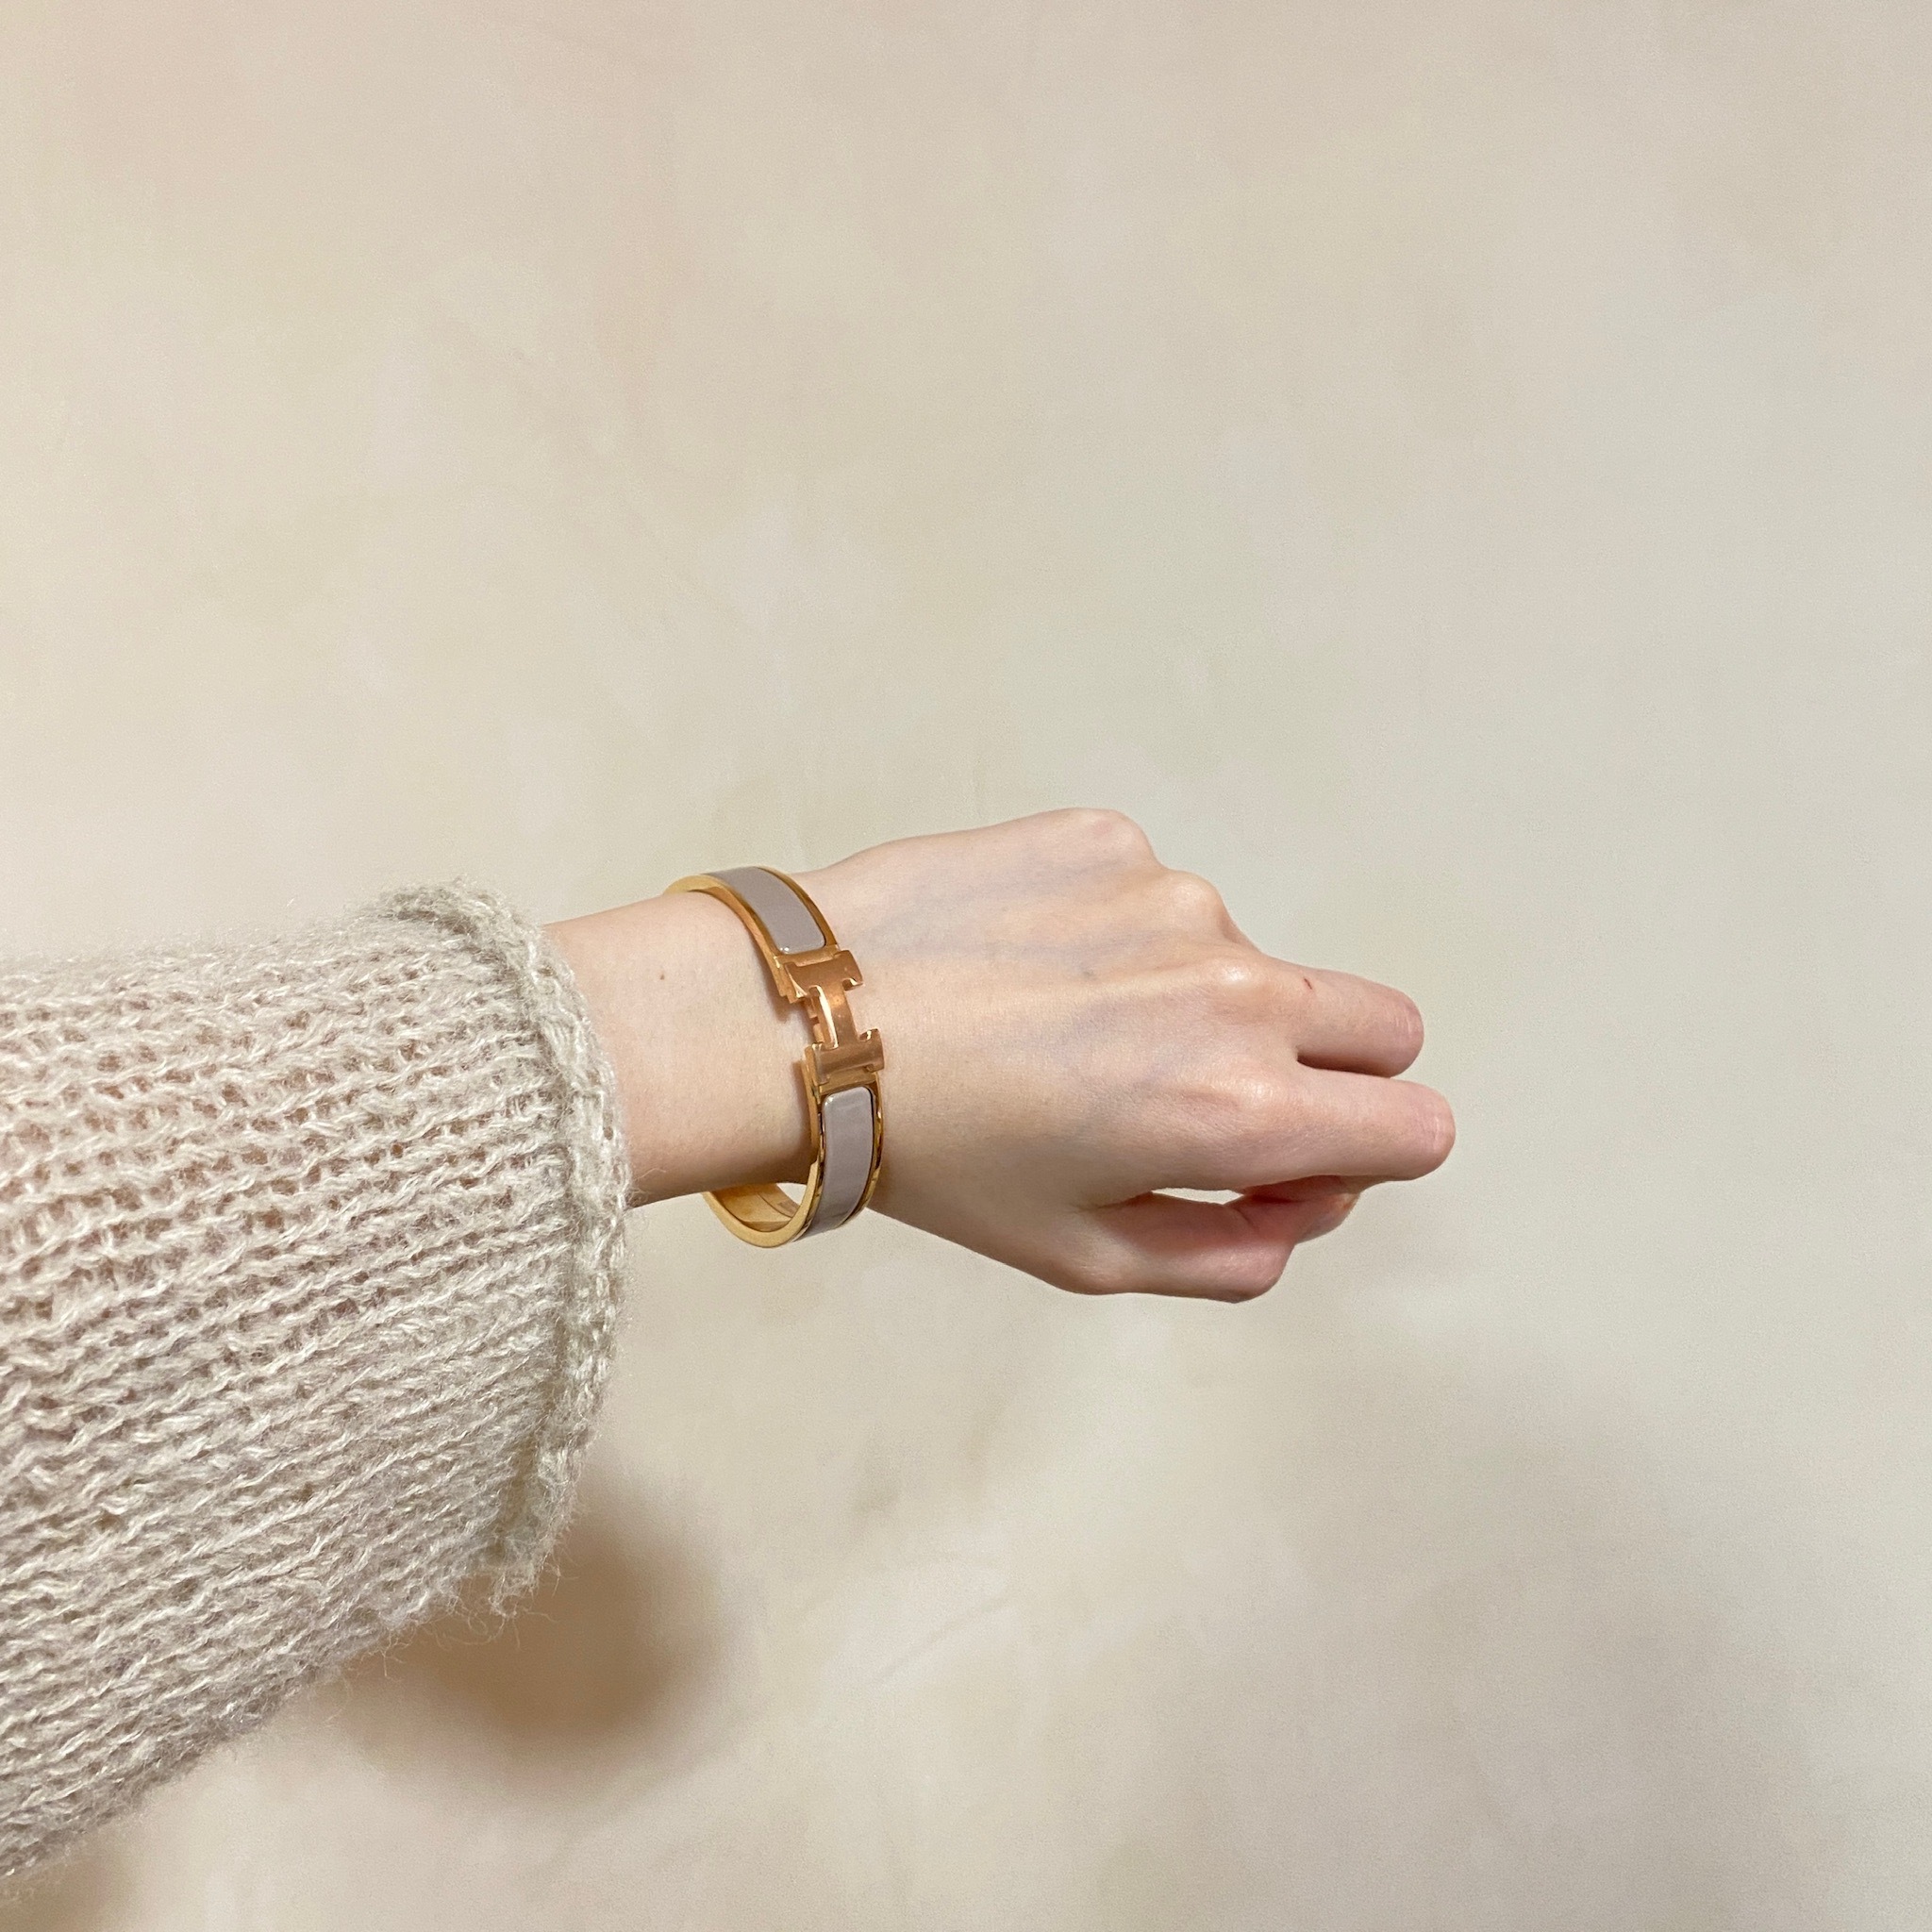 Hermès Marron Glace Enamel Clic H Bracelet PM Rose Gold Hardware Available  For Immediate Sale At Sotheby's